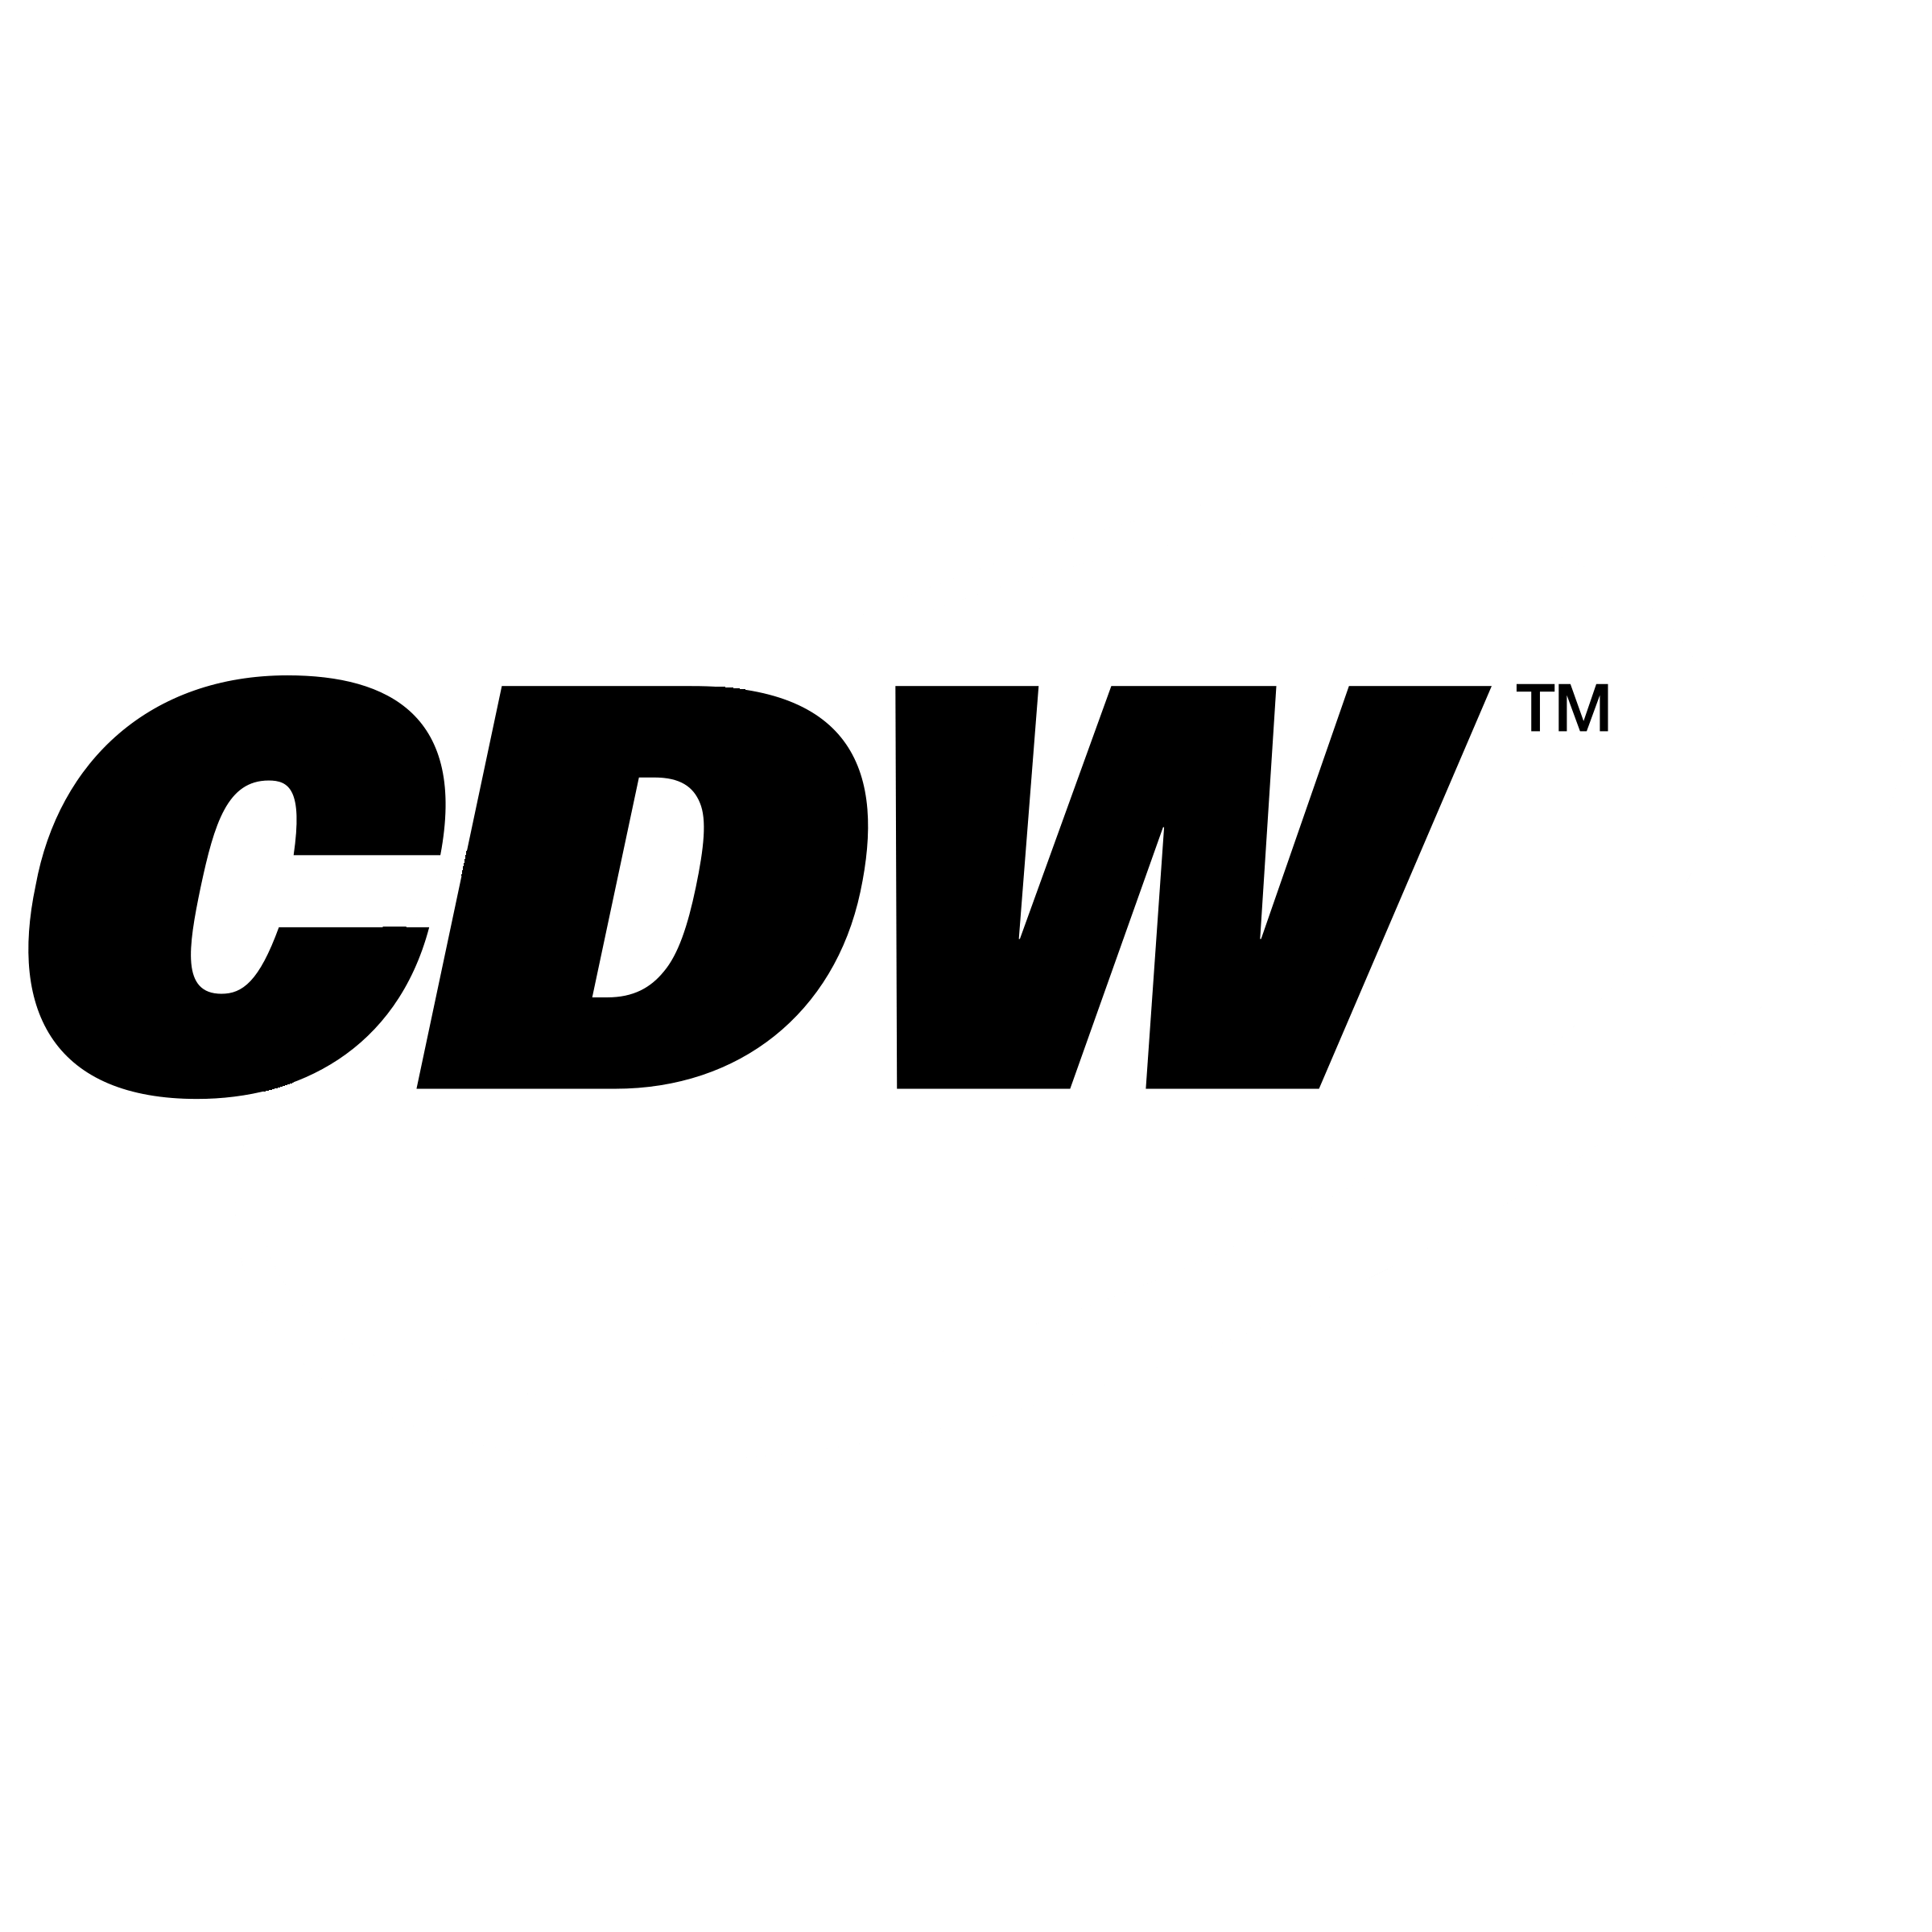 CDW Logo - CDW Computer Centers Logo PNG Transparent & SVG Vector - Freebie Supply